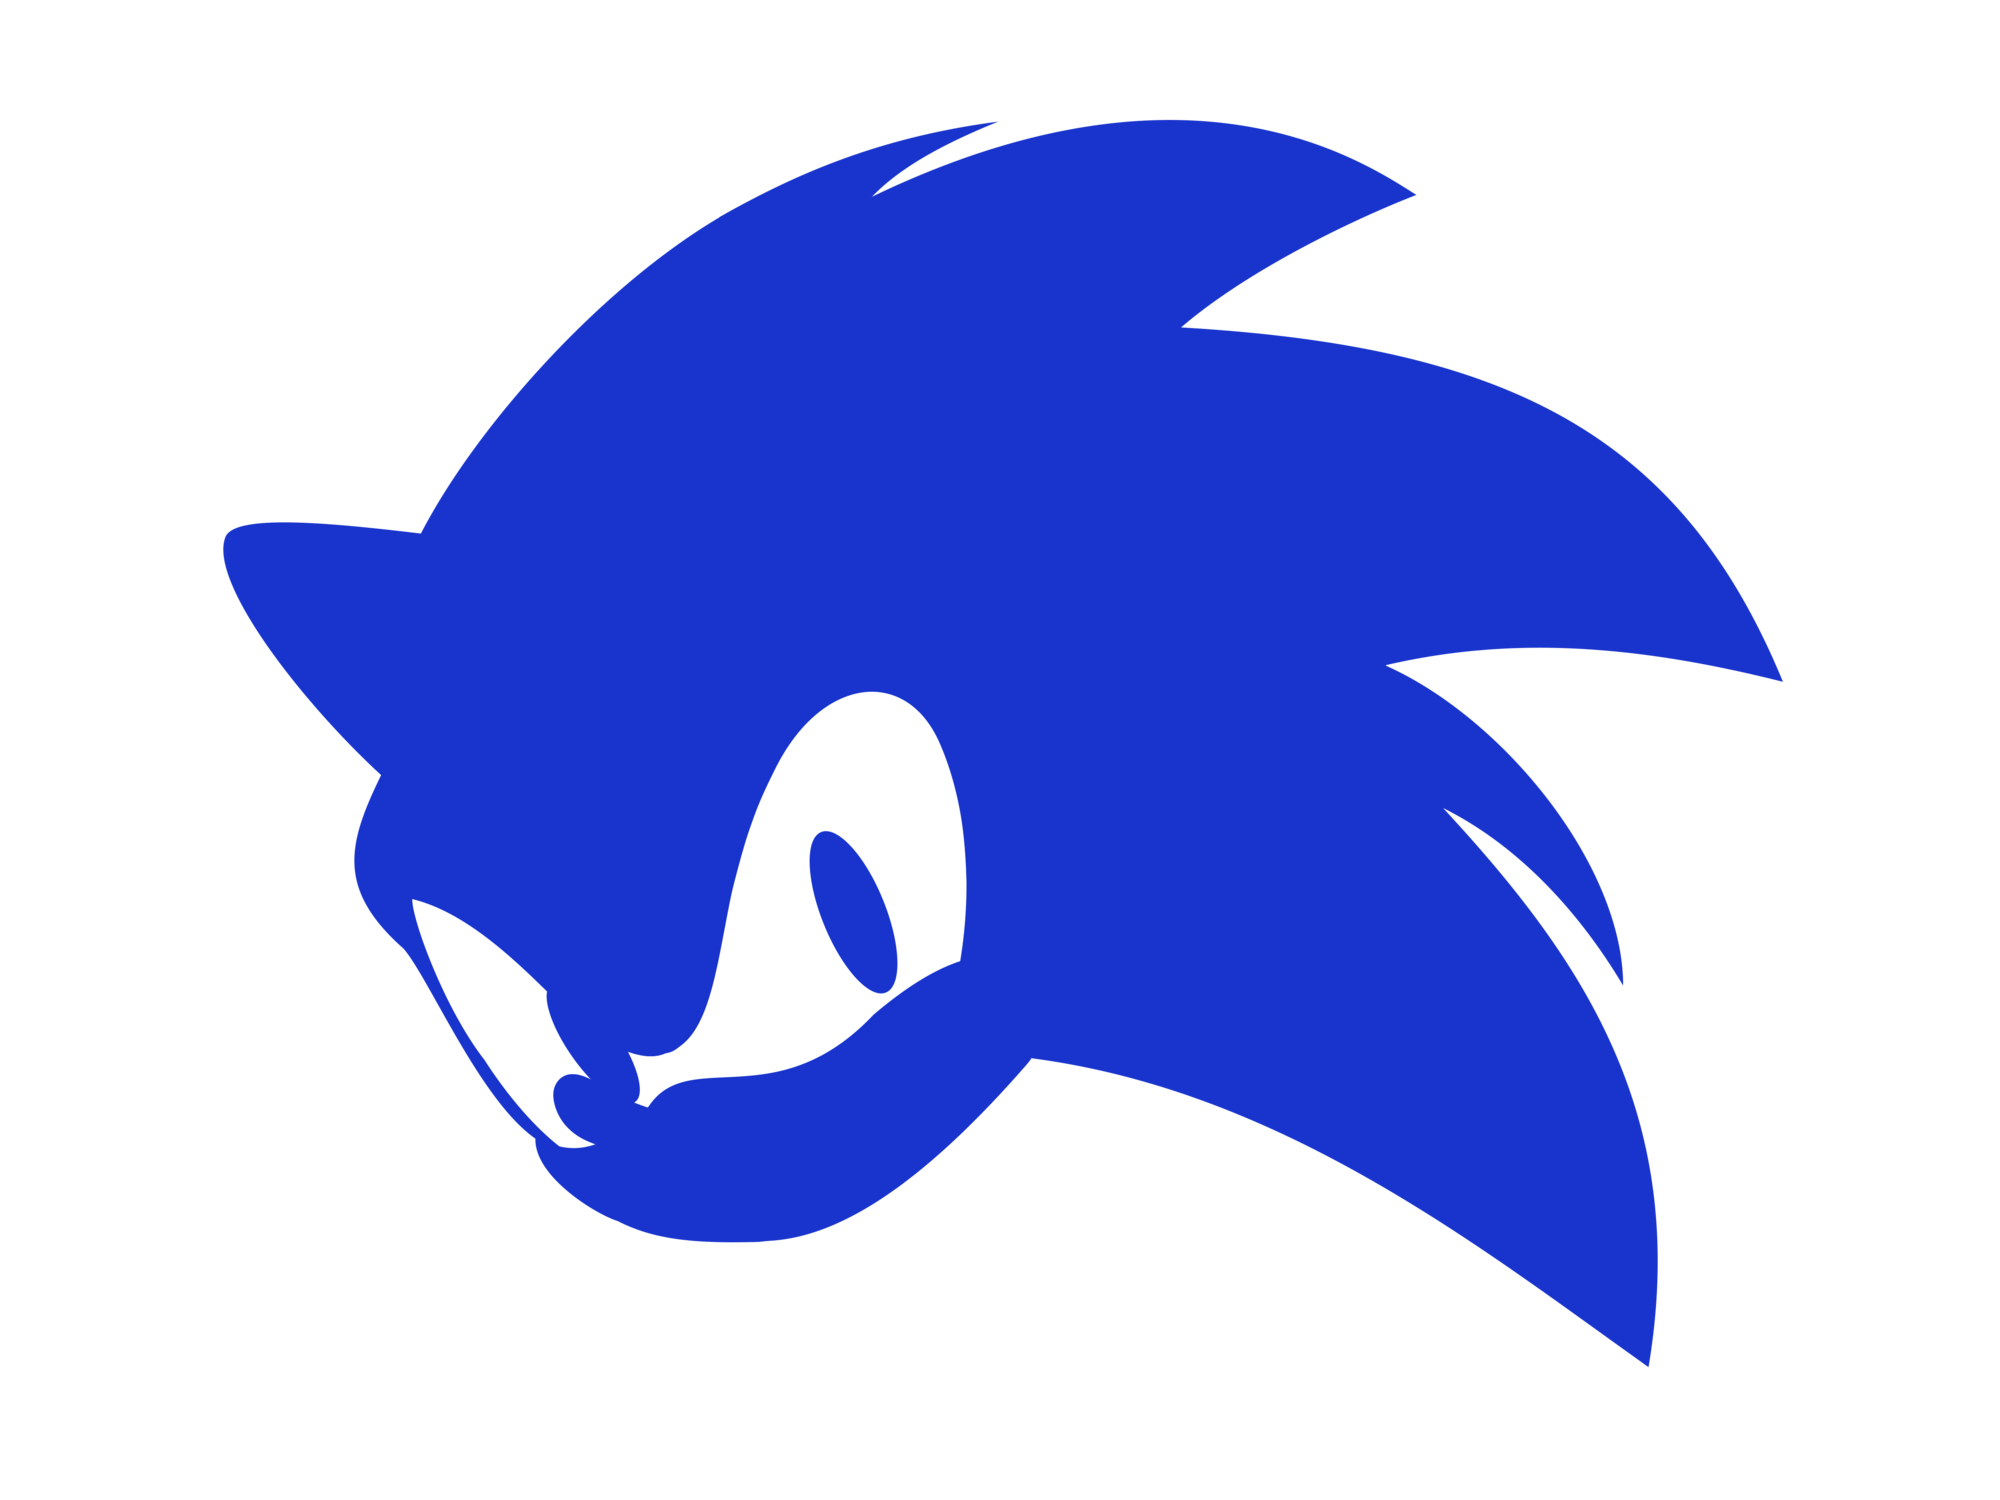 Sonic Logo PNG File